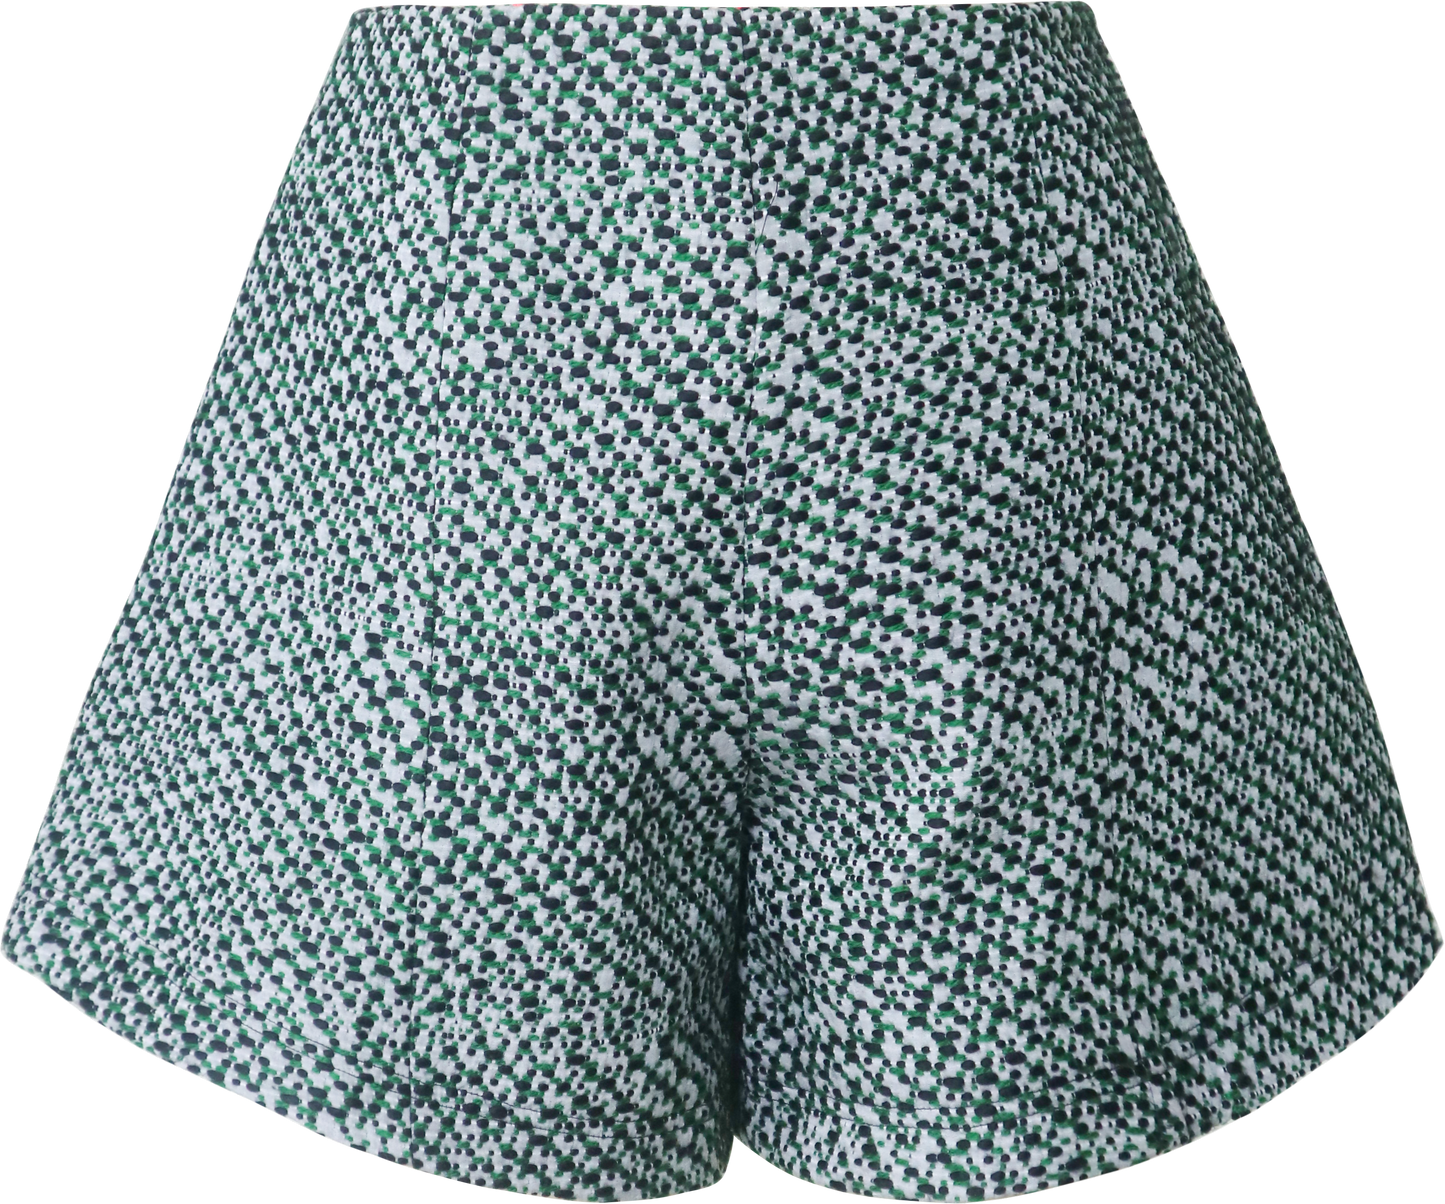 Green Woven Shorts